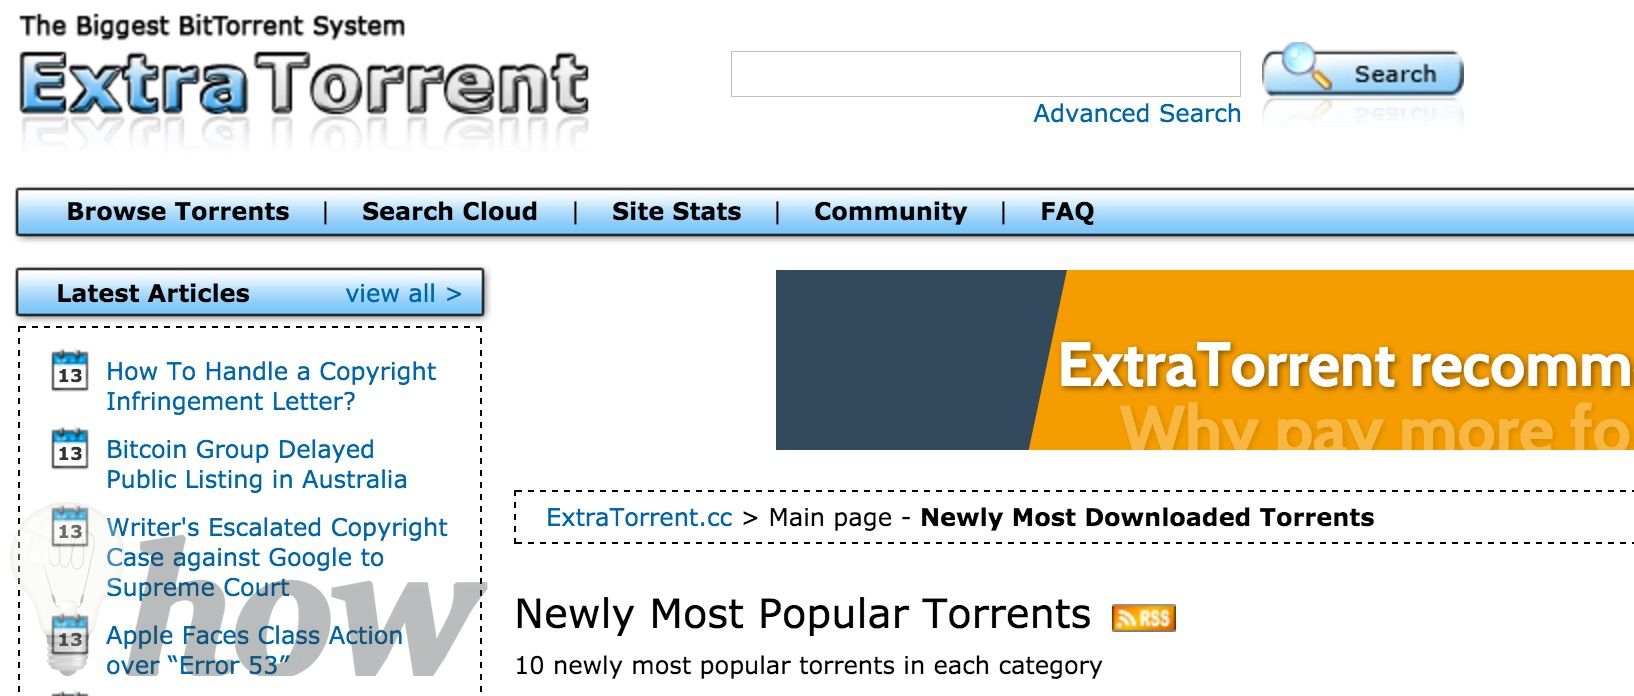 Best Torrent Site For Windows Software